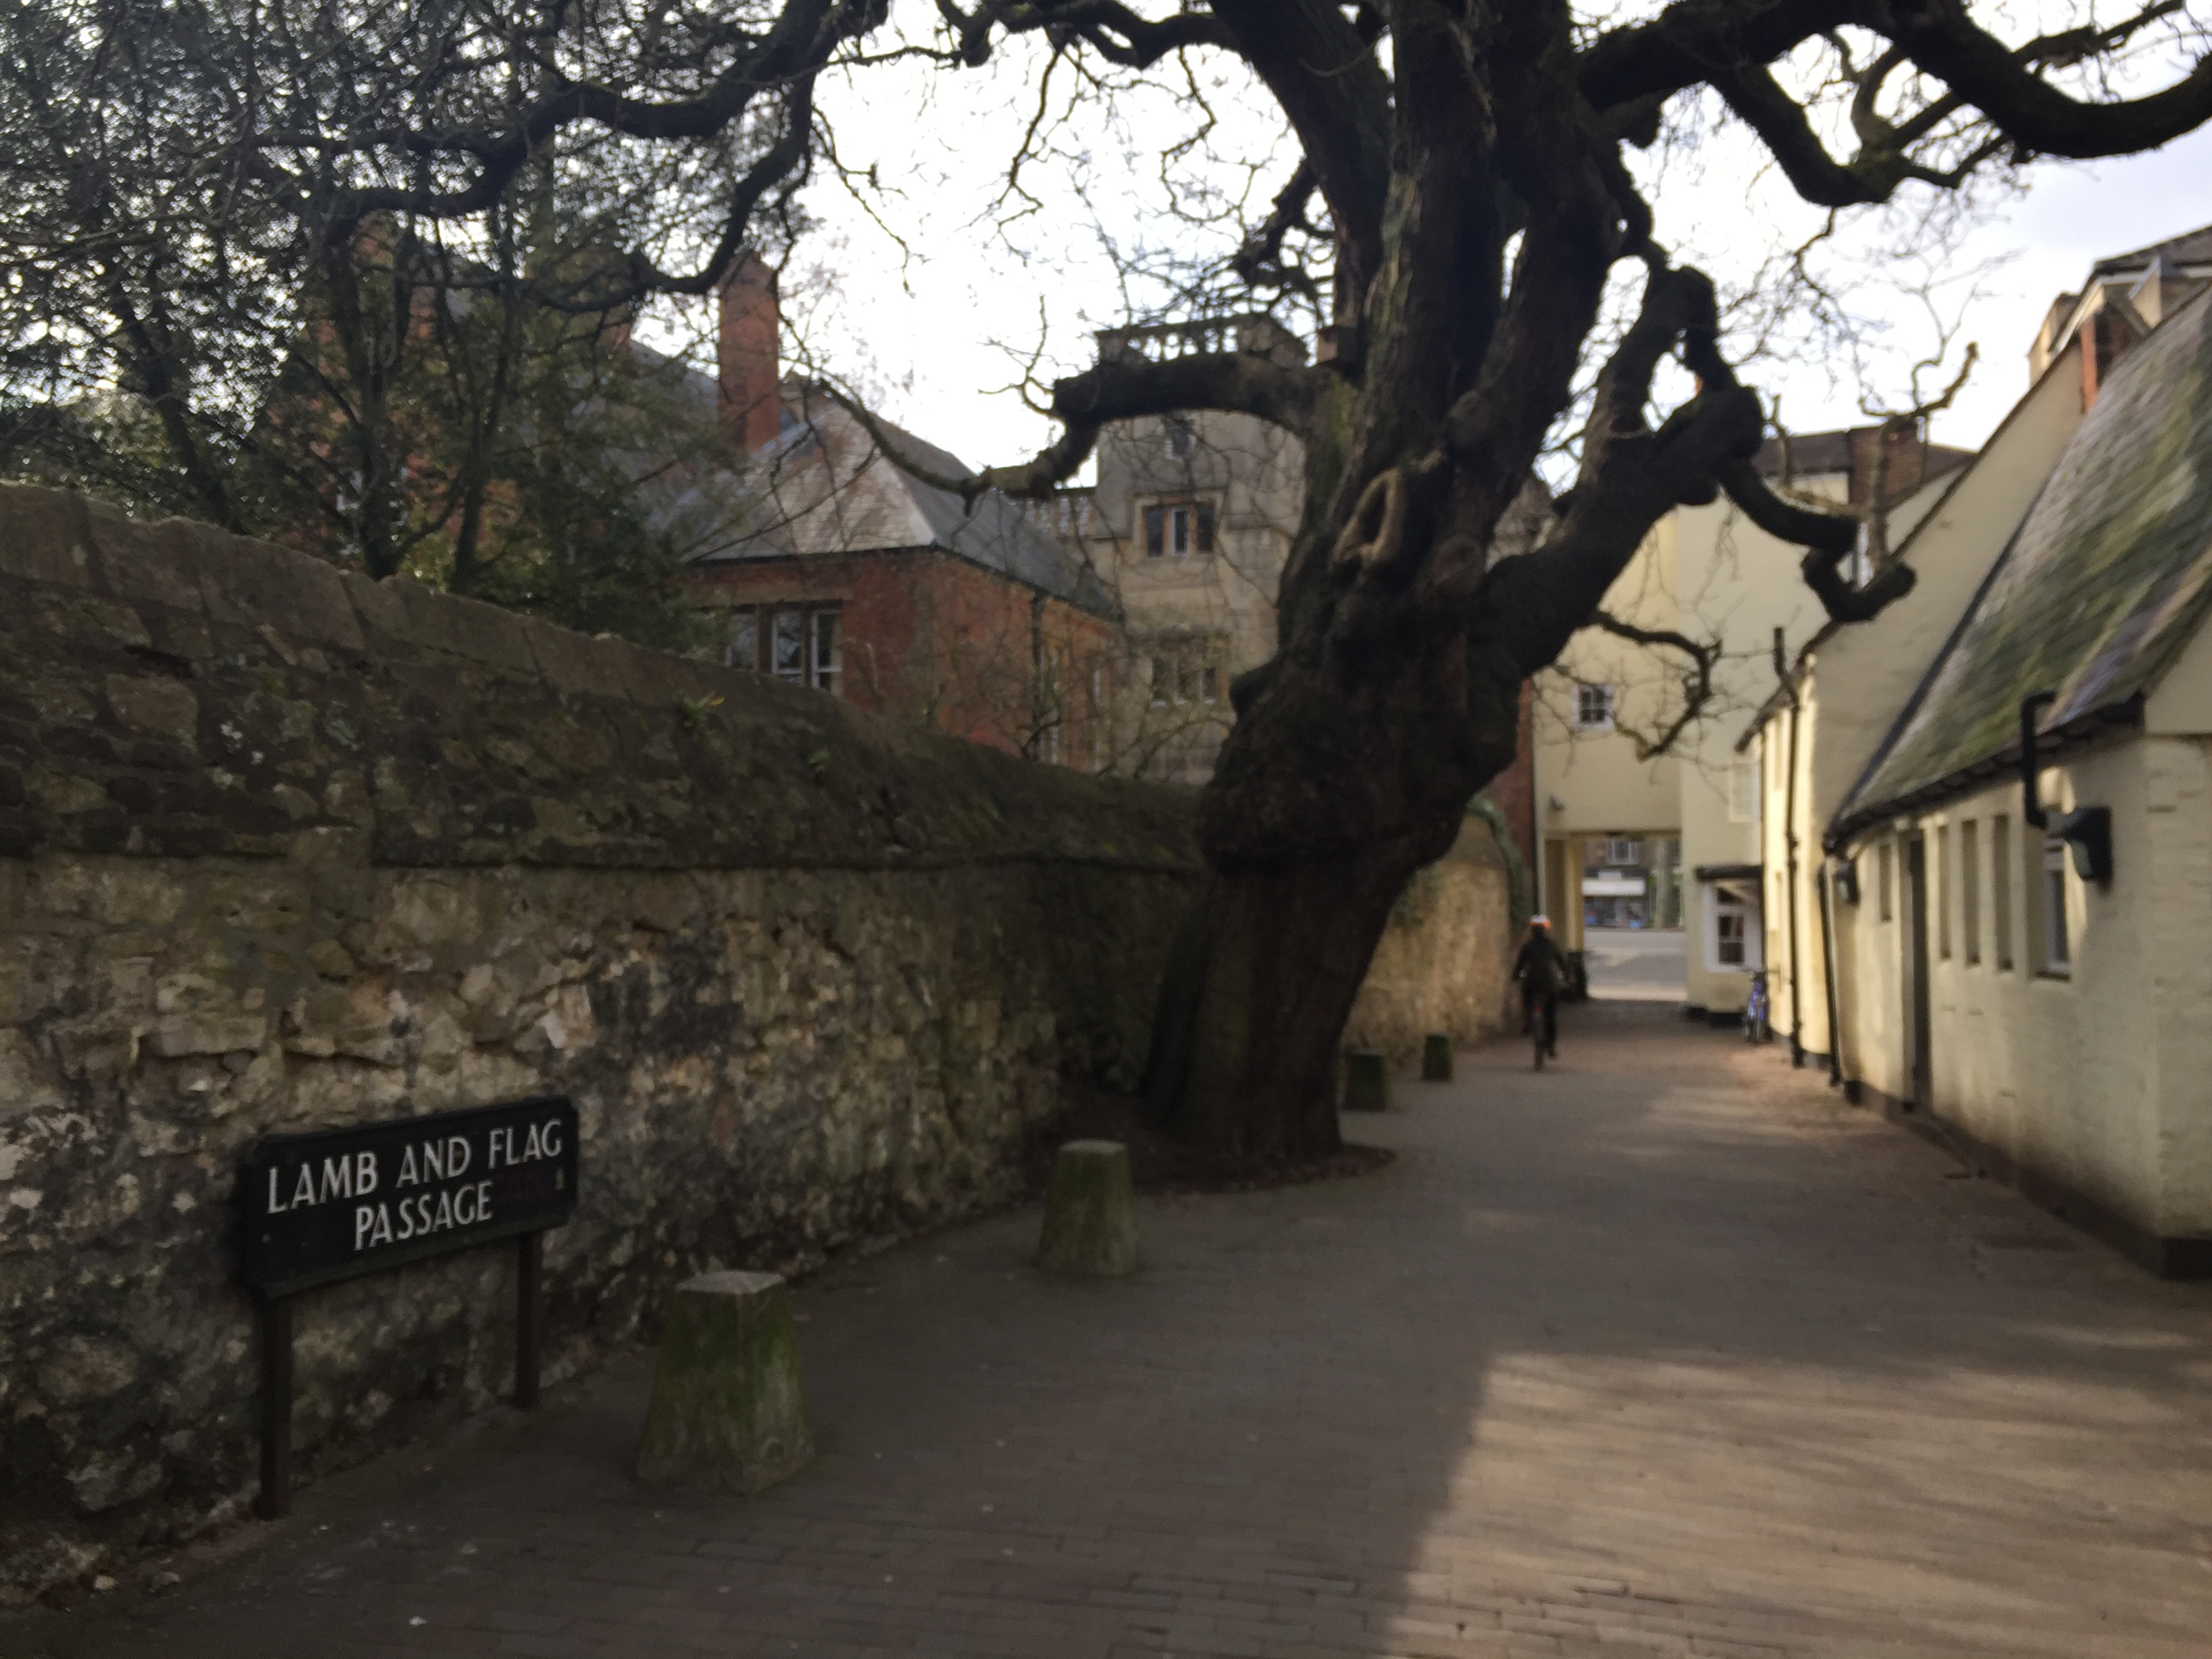 Oxford street scene with gnarled tree